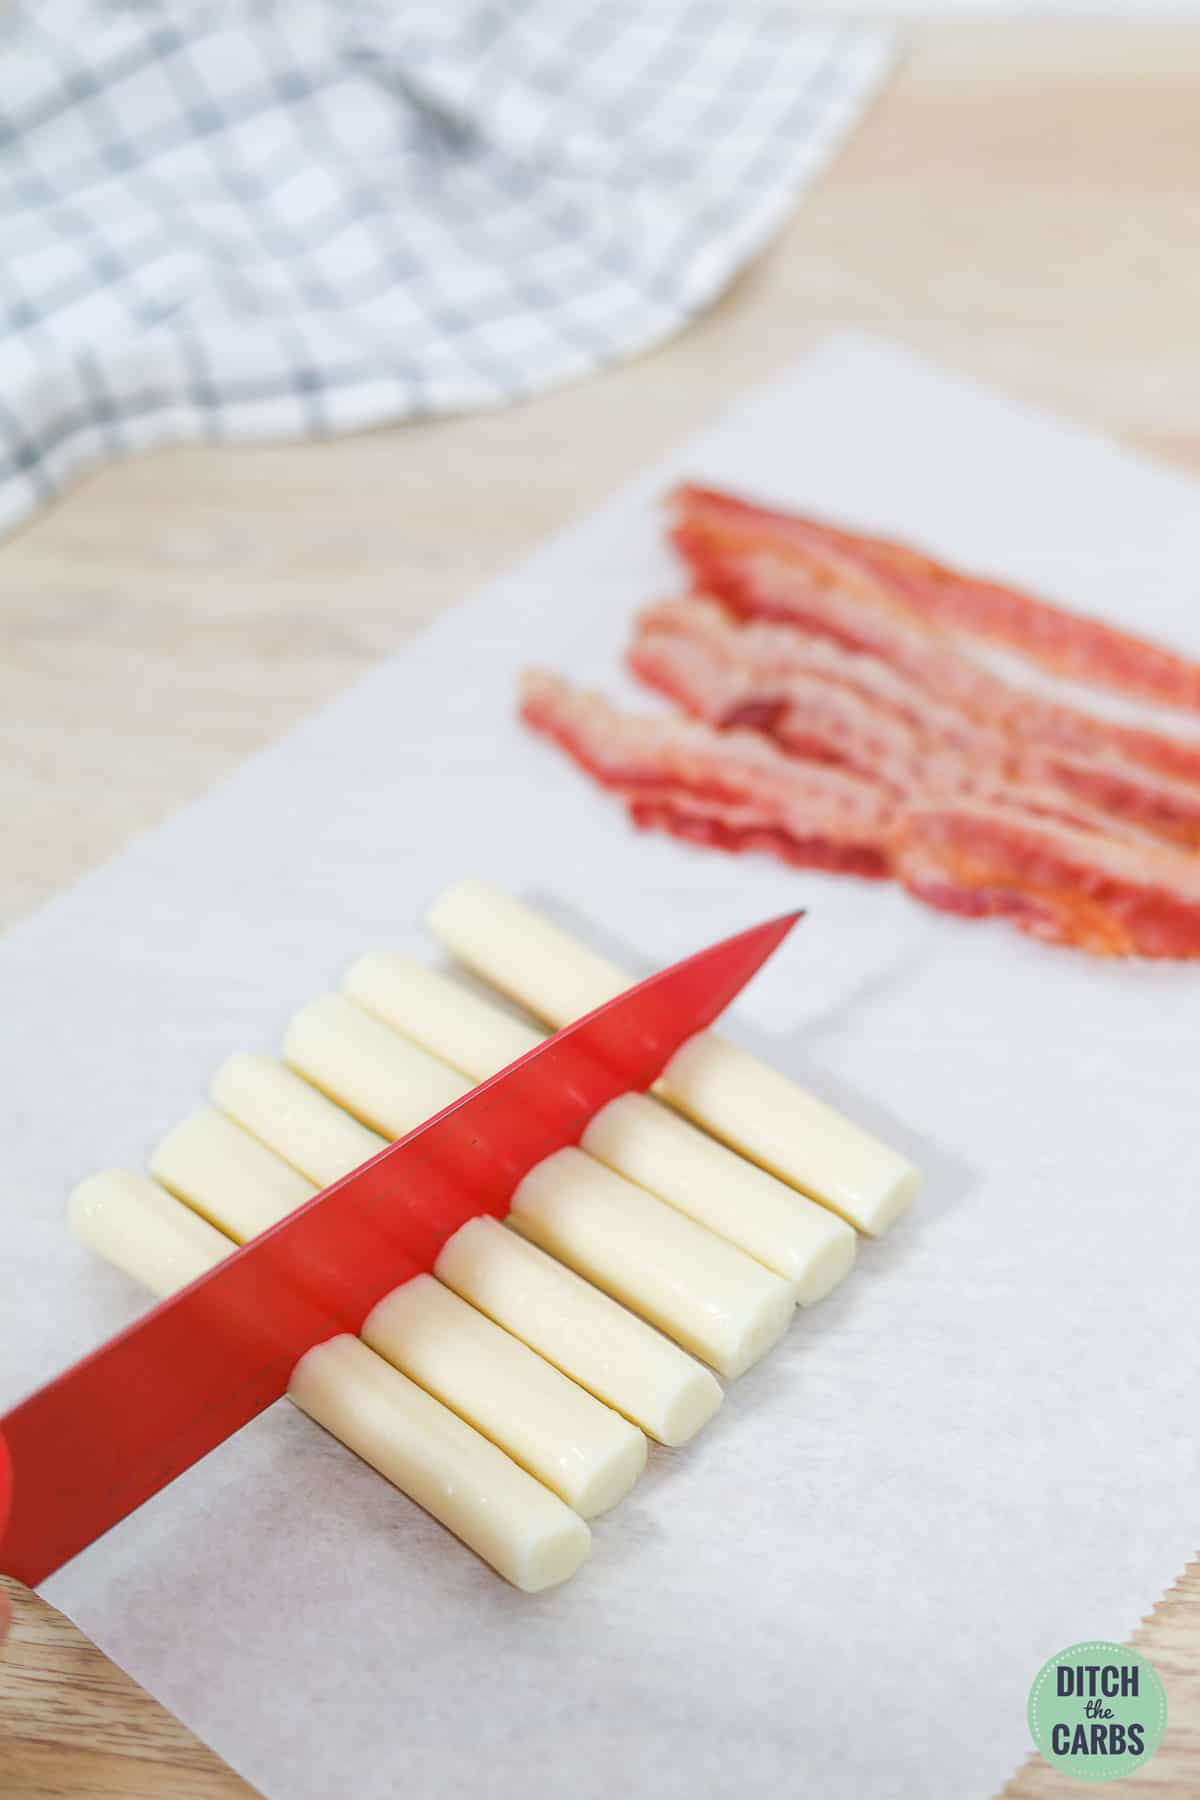 A knife cutting cheese sticks in half